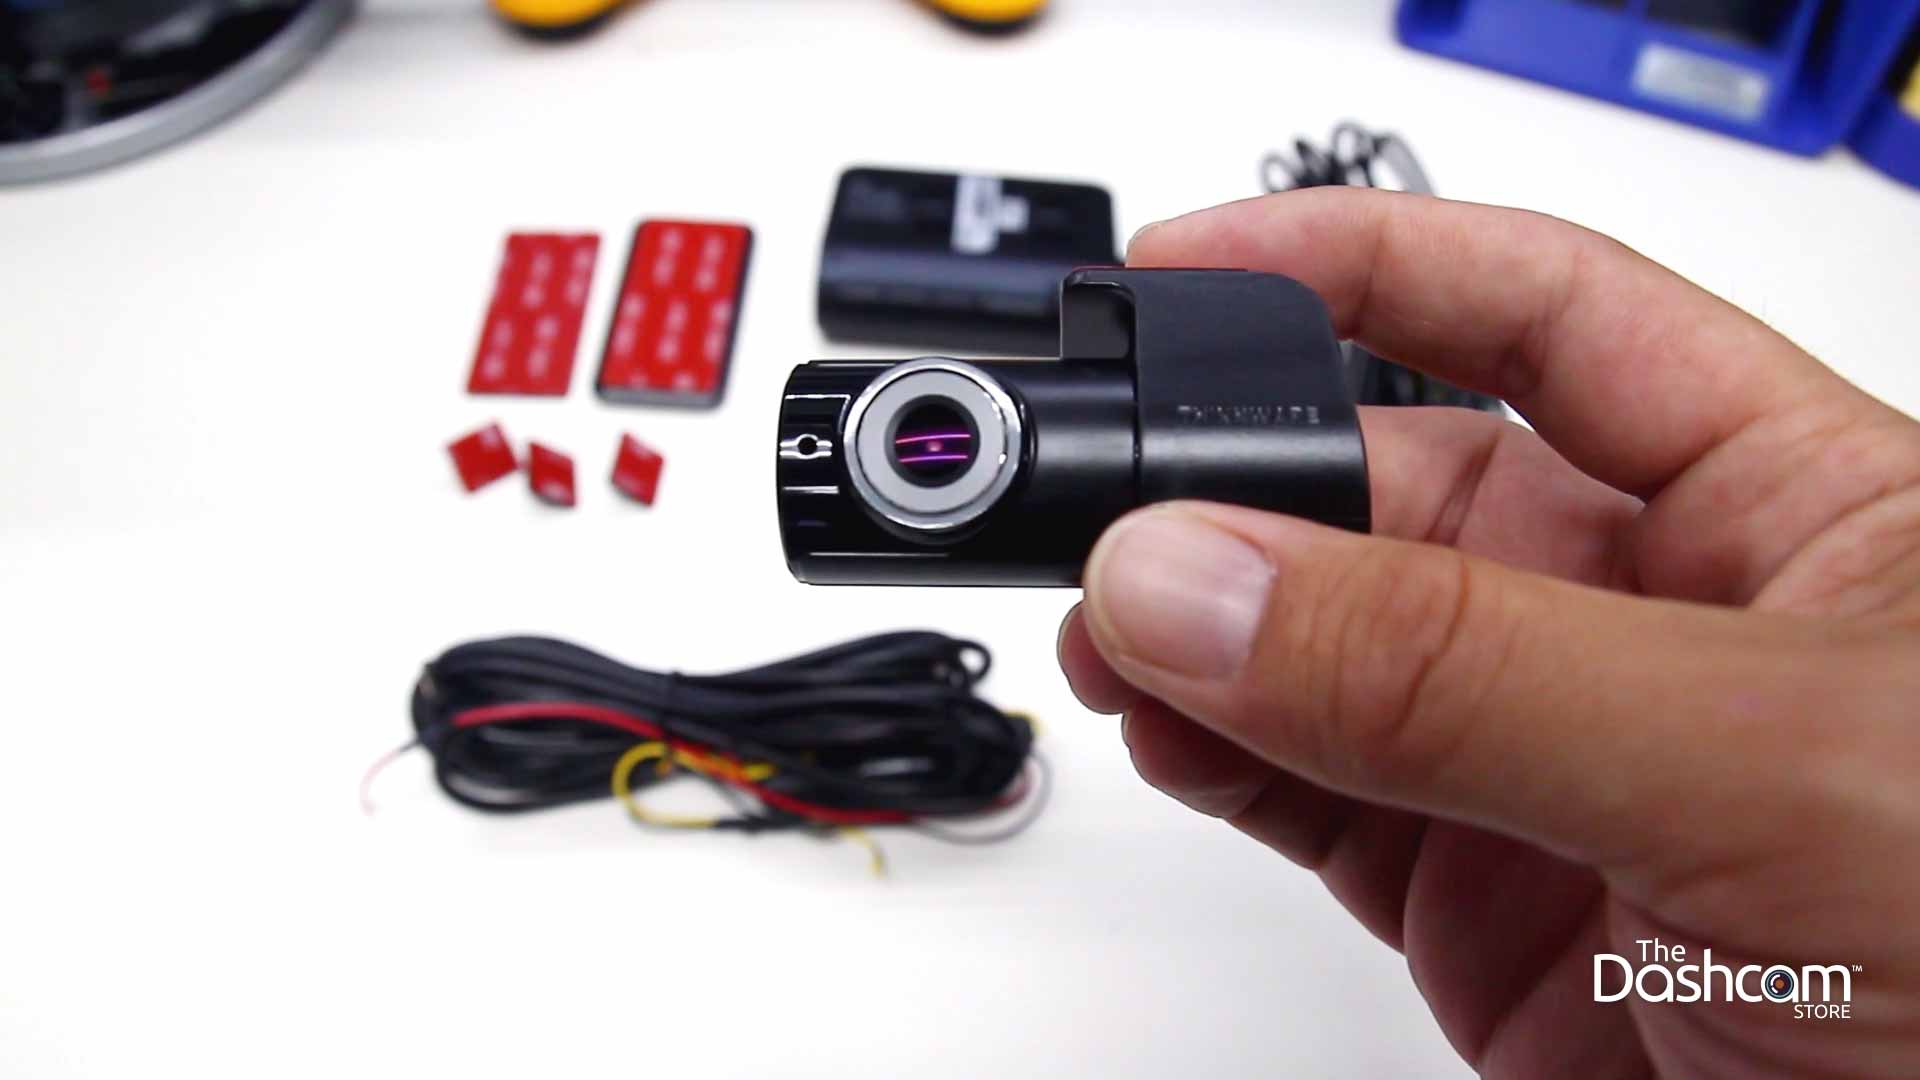 Garmin Dash Cam Mini 2 - Unboxing and installation 